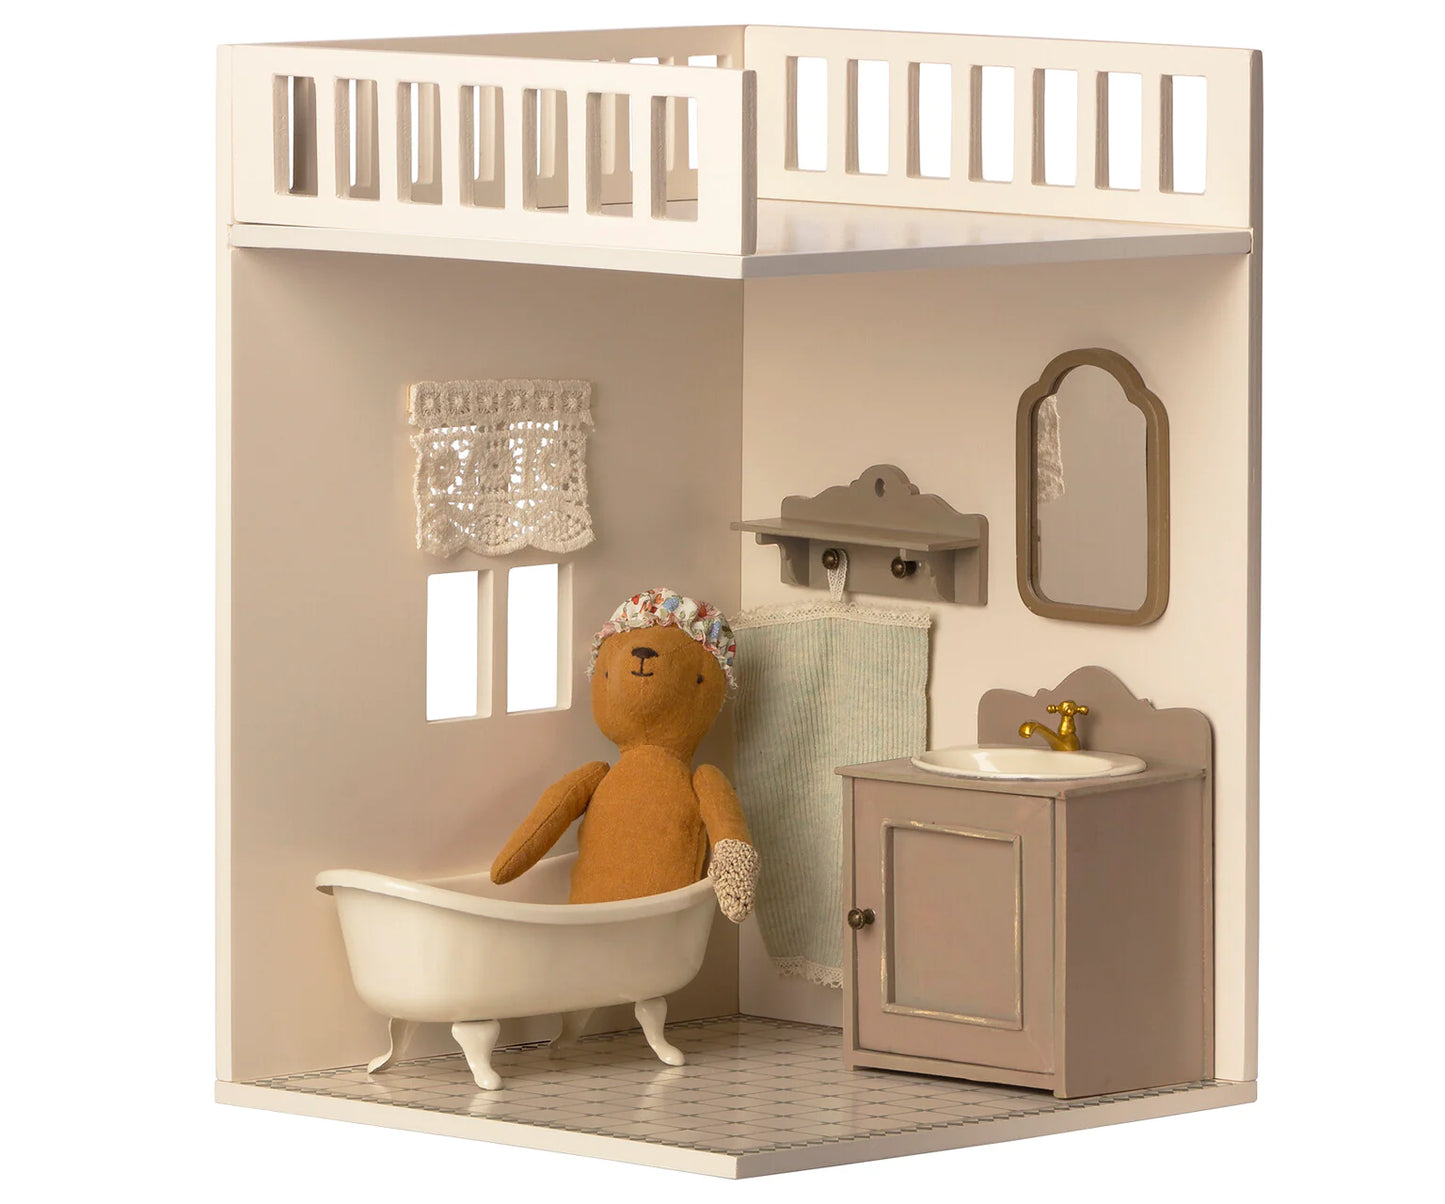 House of Miniature Bathroom - Maileg